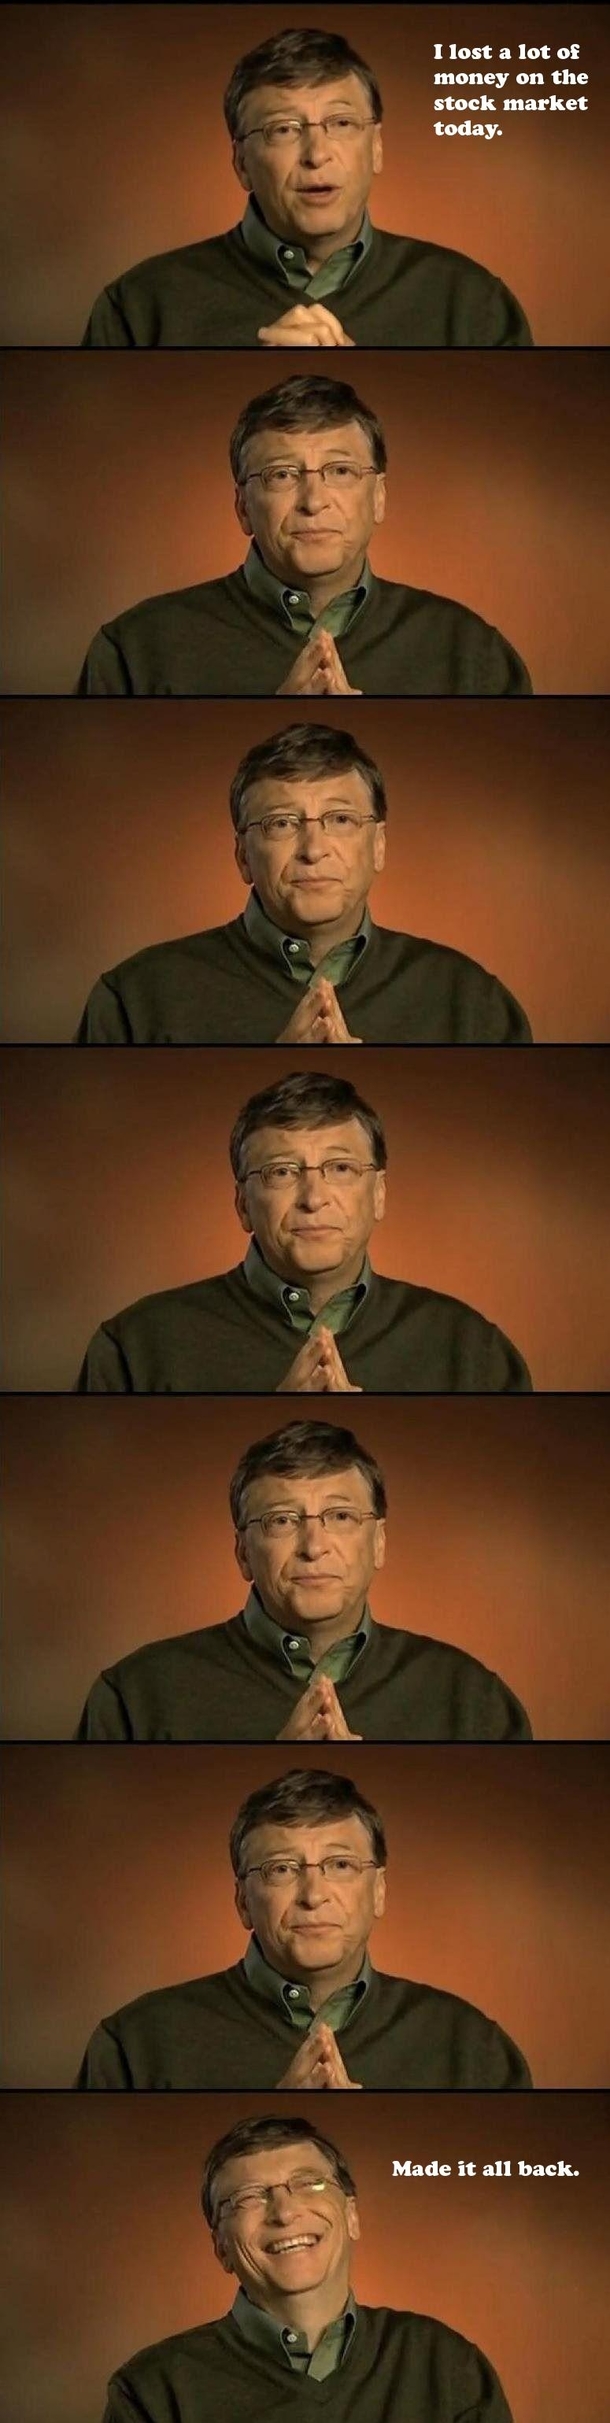 Bill Gates on the Stock Market Lately